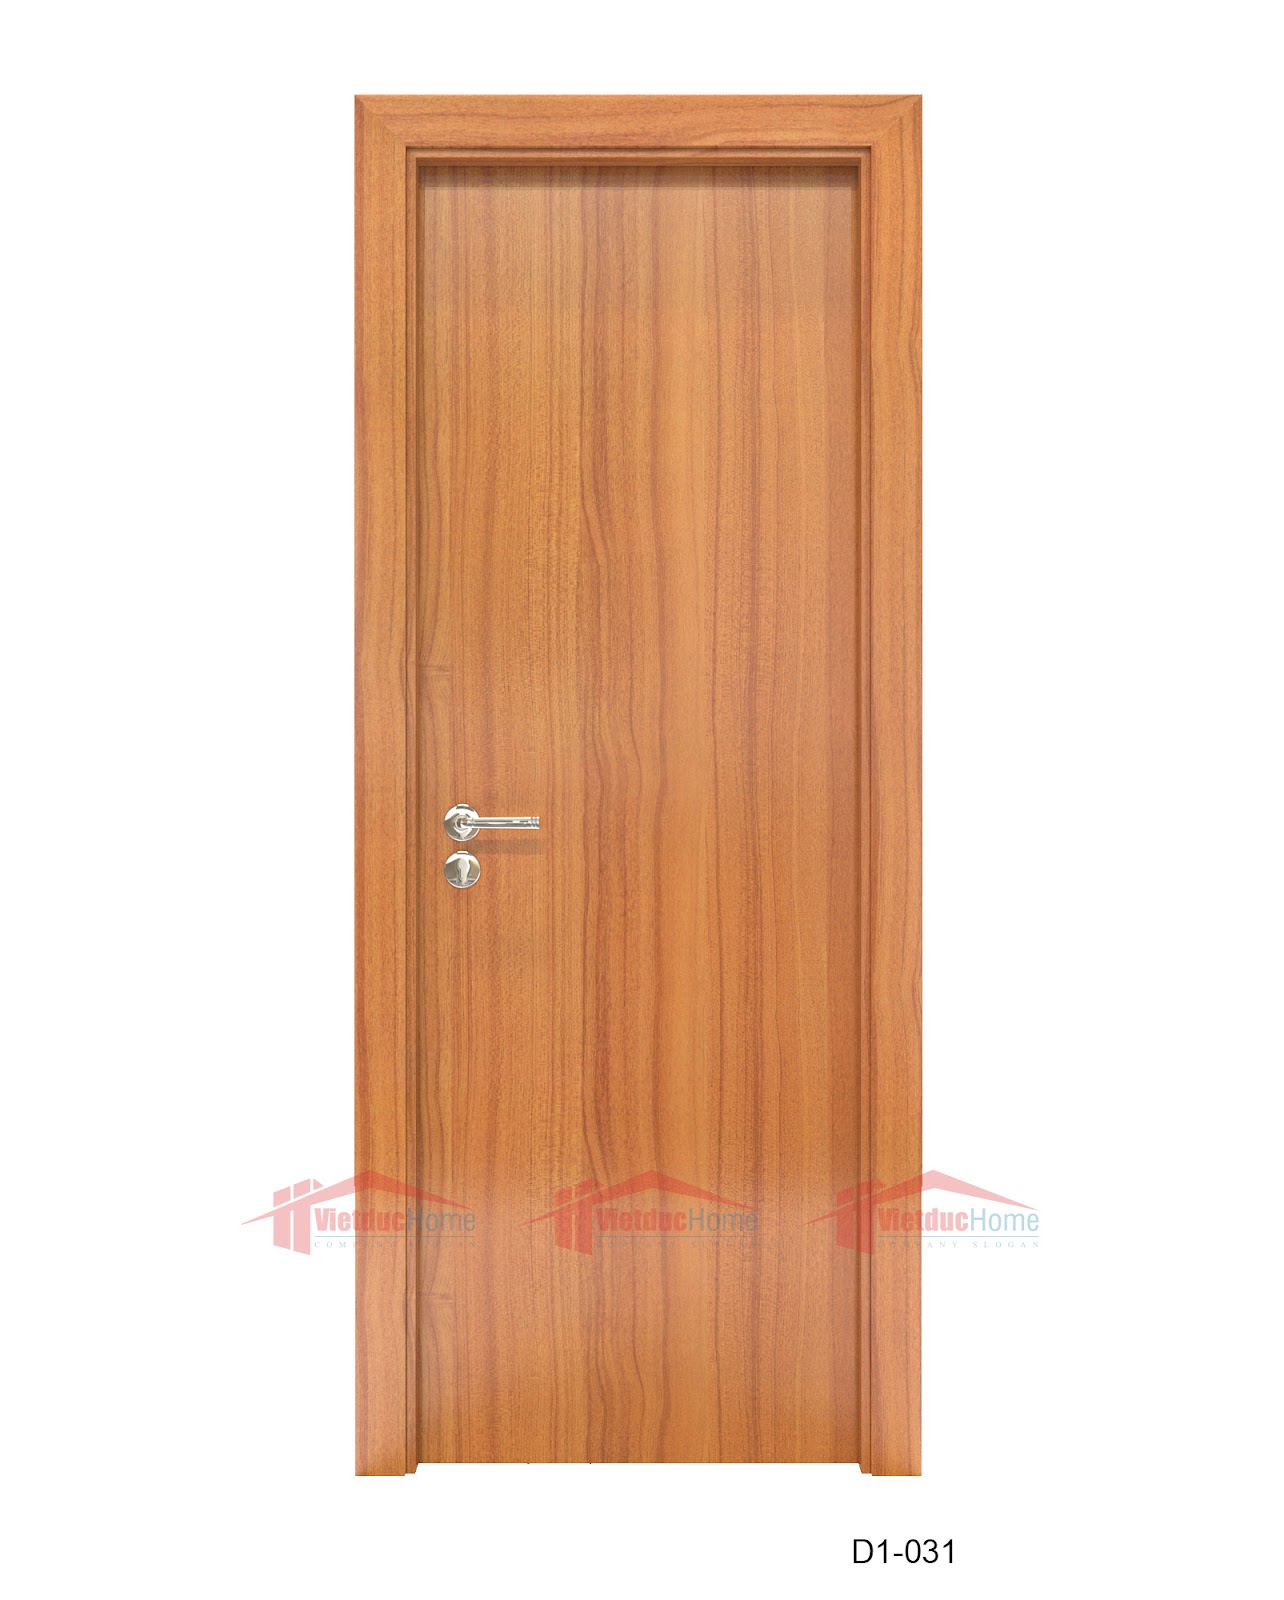 Mẫu cửa nhựa gỗ composite vân gỗ đẹp D1-031.